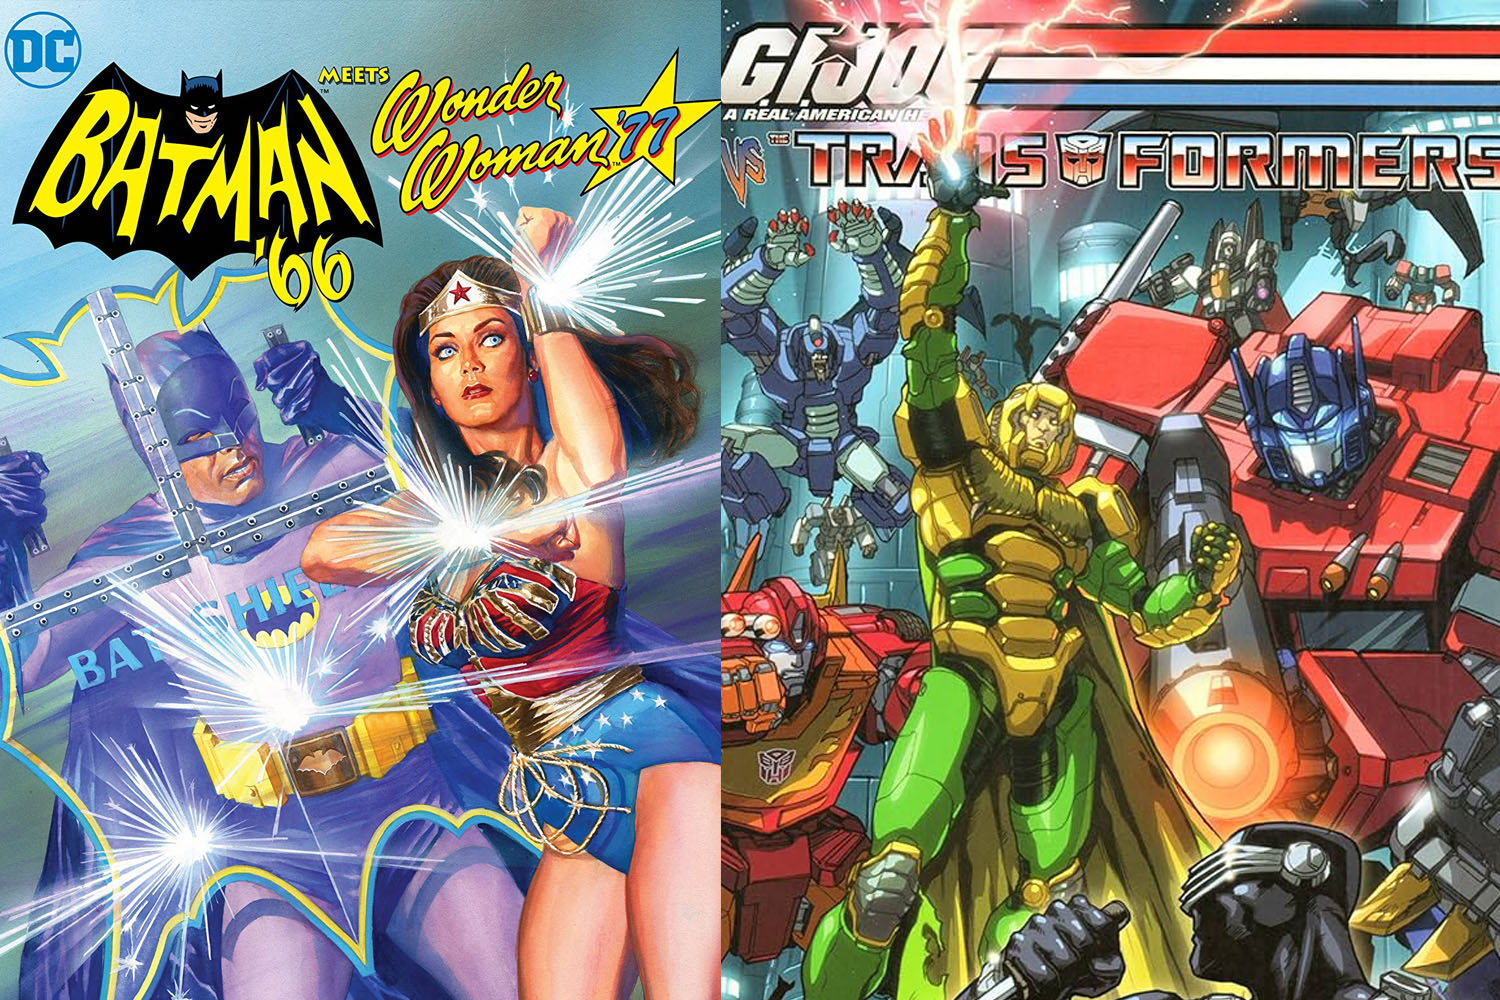 Comics Publishers Revive Classic Media for Nostalgia Appeal